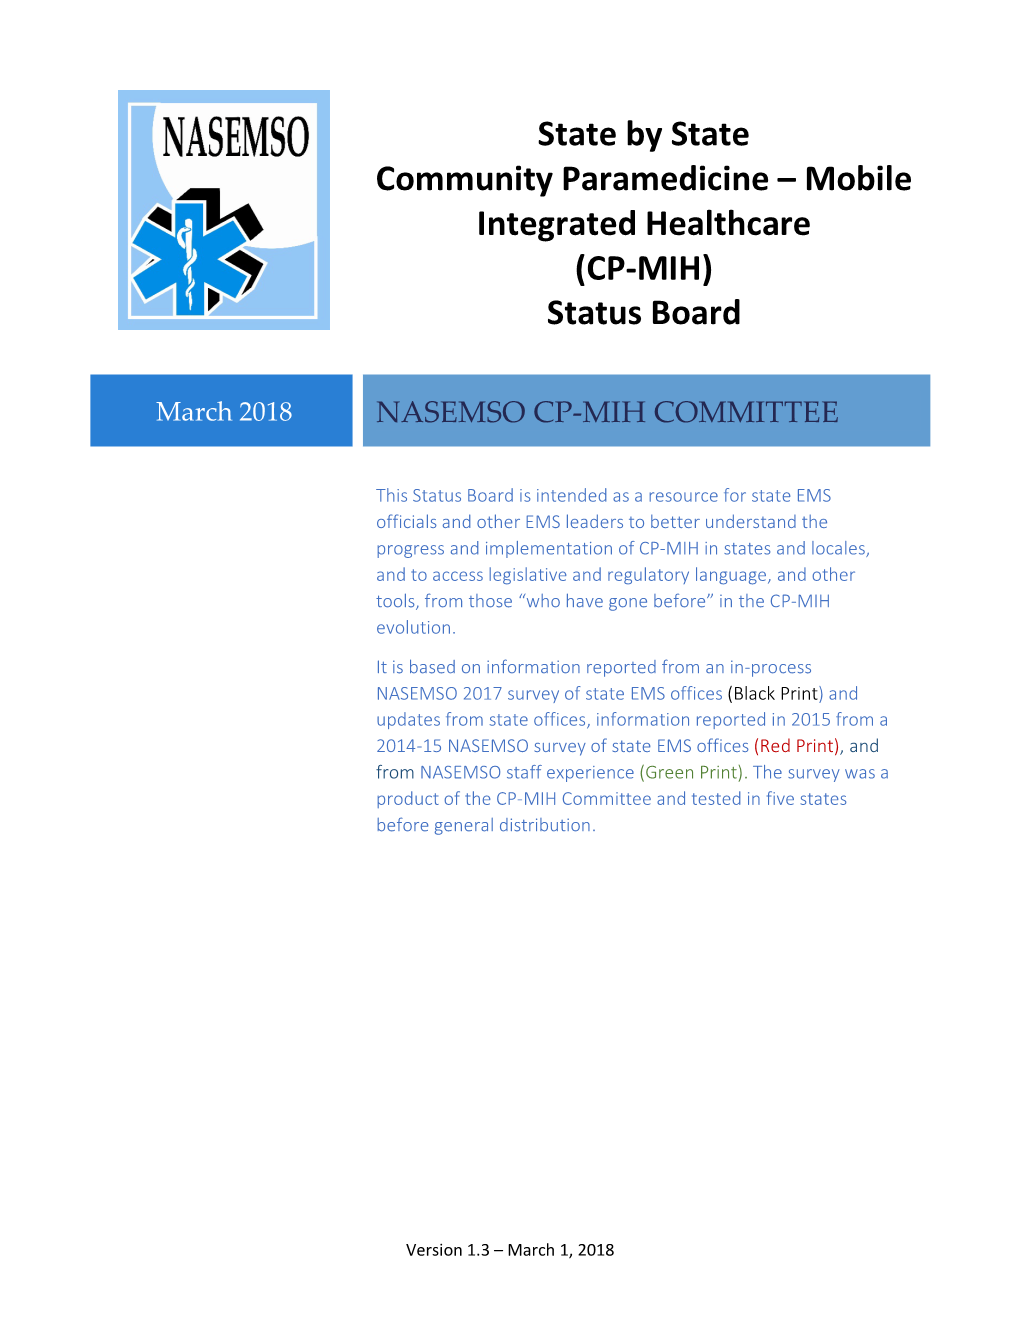 Mobile Integrated Healthcare (CP-MIH) Status Board